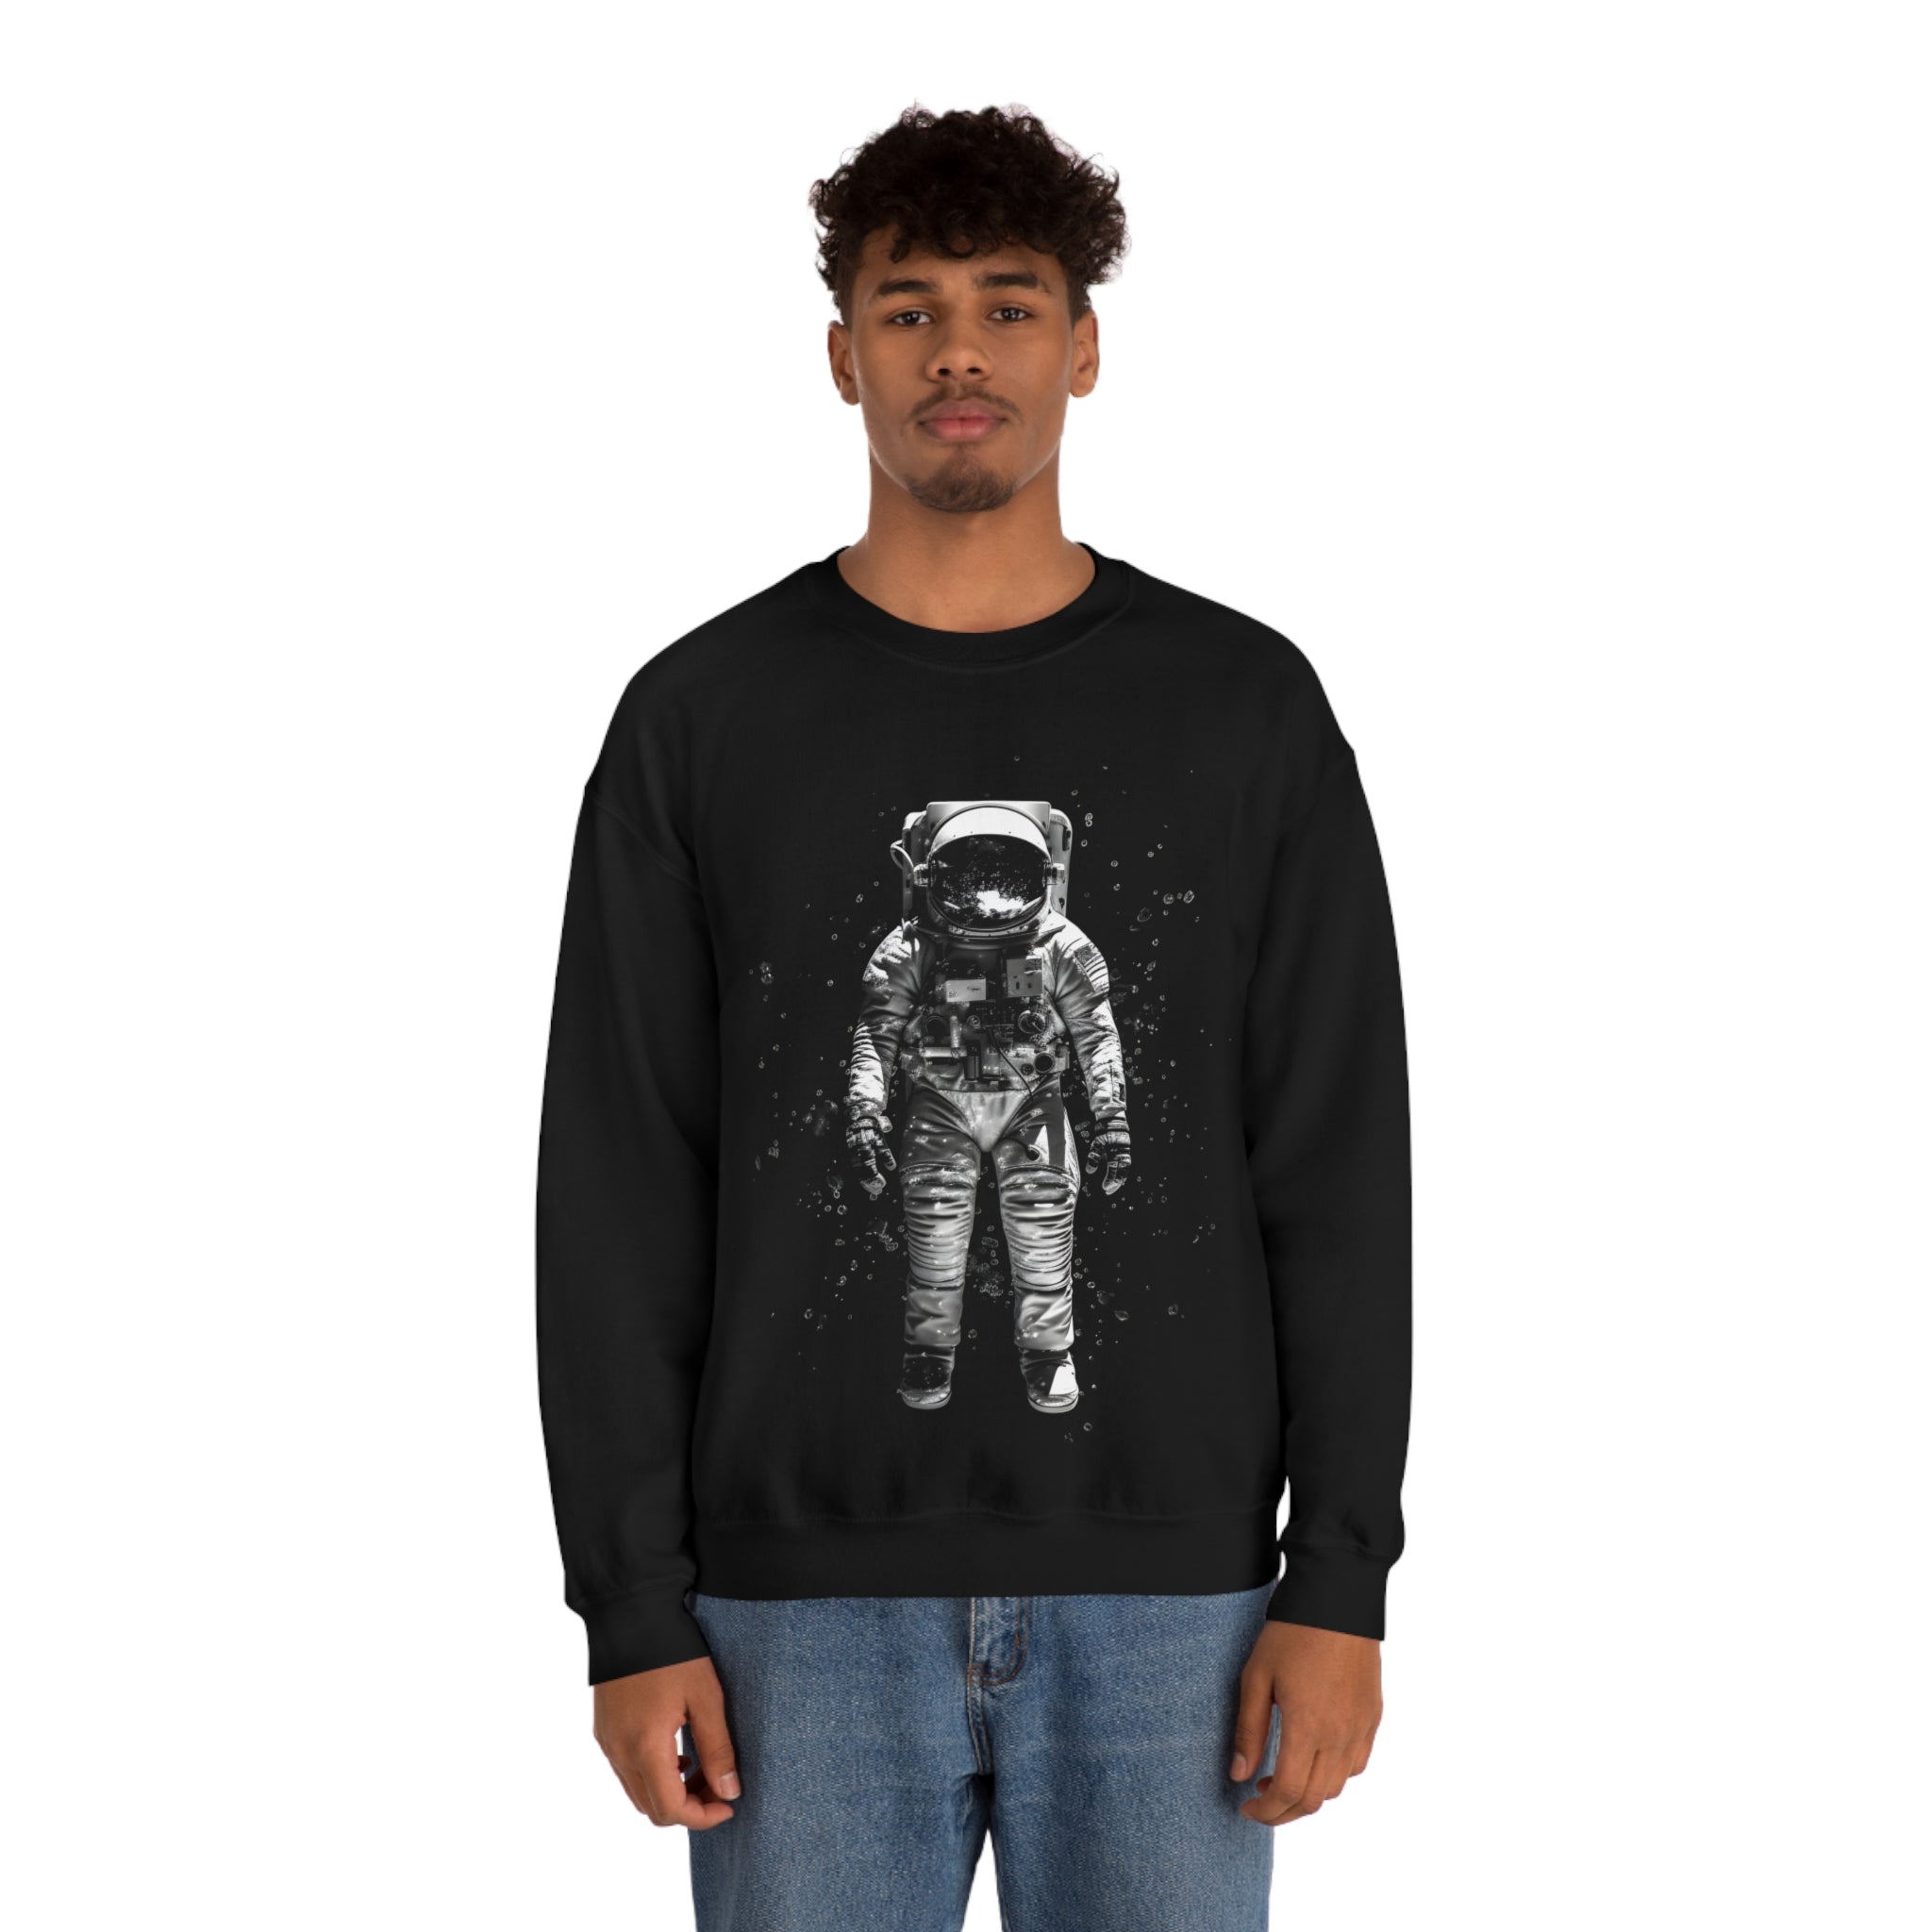 Astronaut Aesthetics Sweatshirt